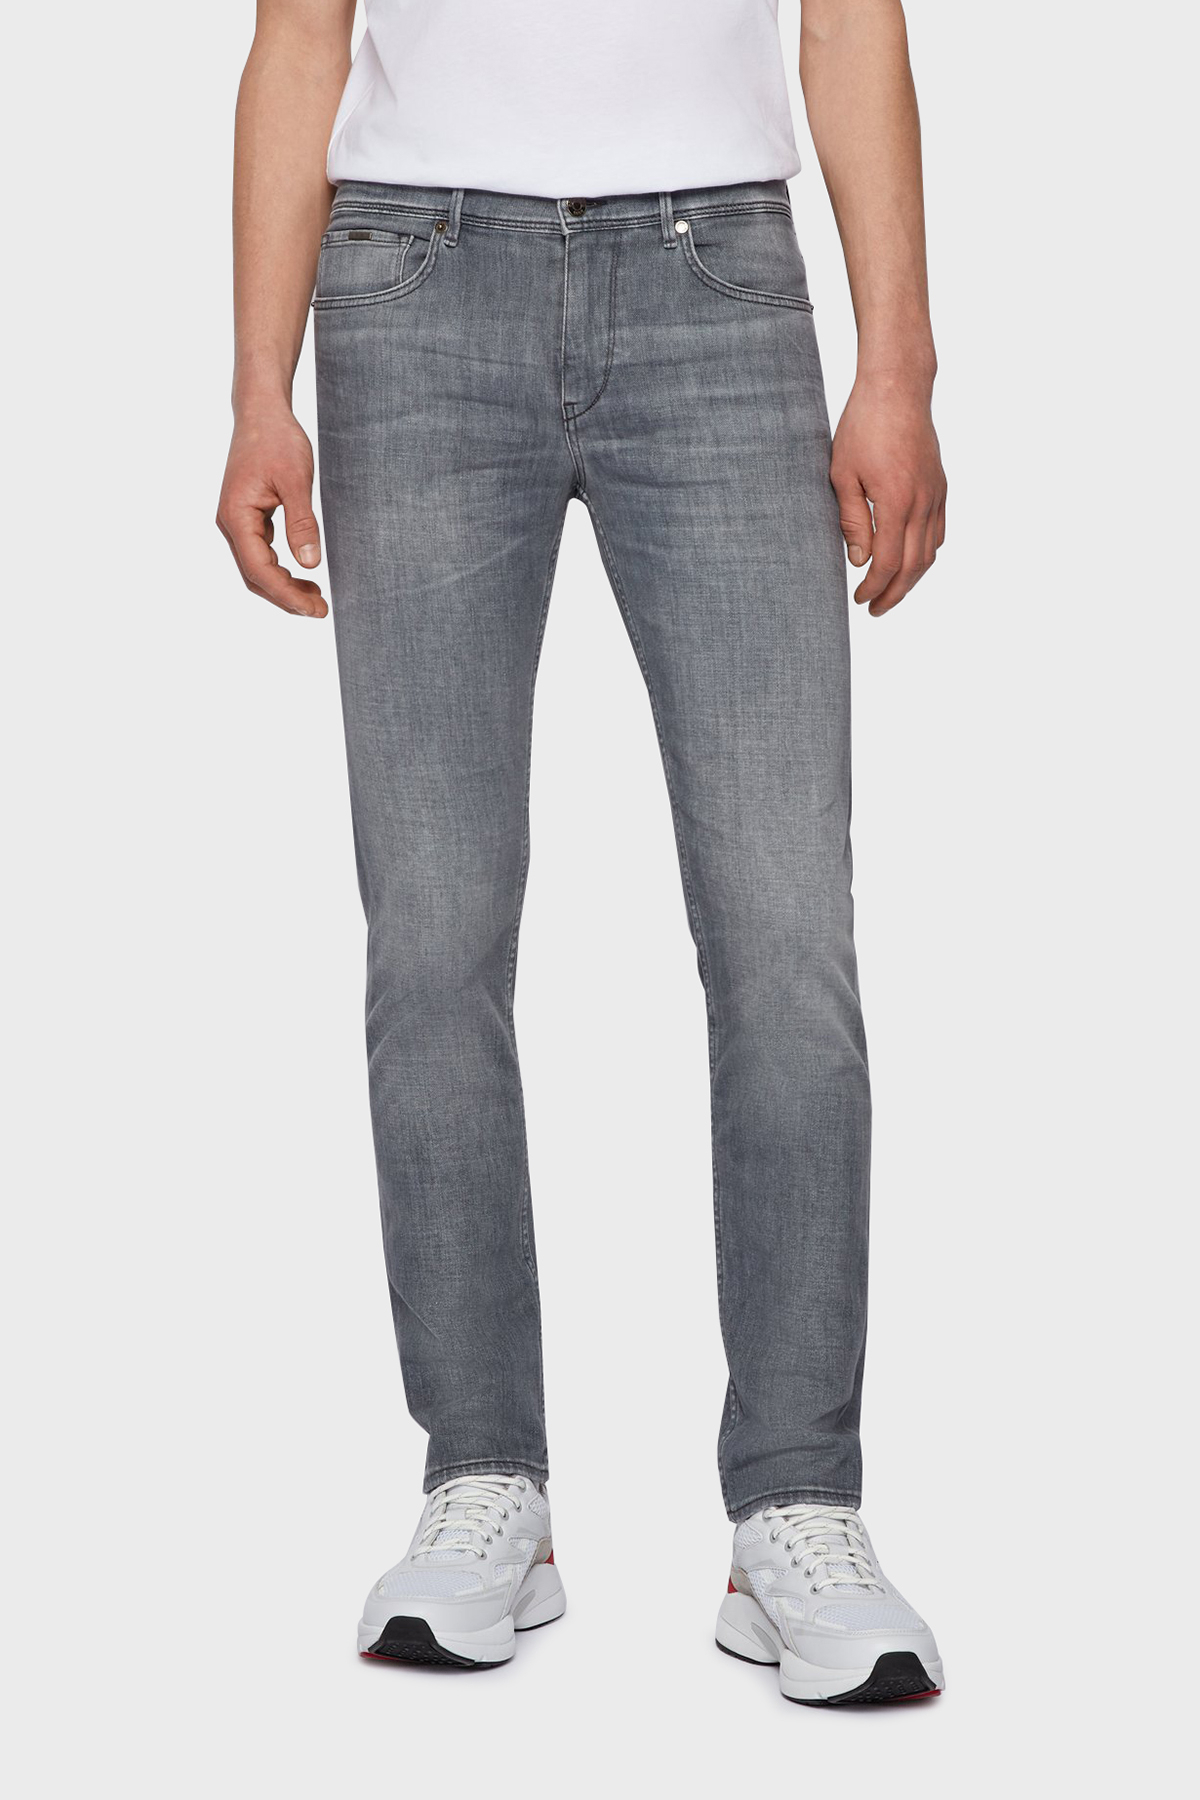 Hugo Boss Extra Slim Fit Düşük Bel Pamuklu Jeans Erkek Kot Pantolon 50453139 040 GRİ